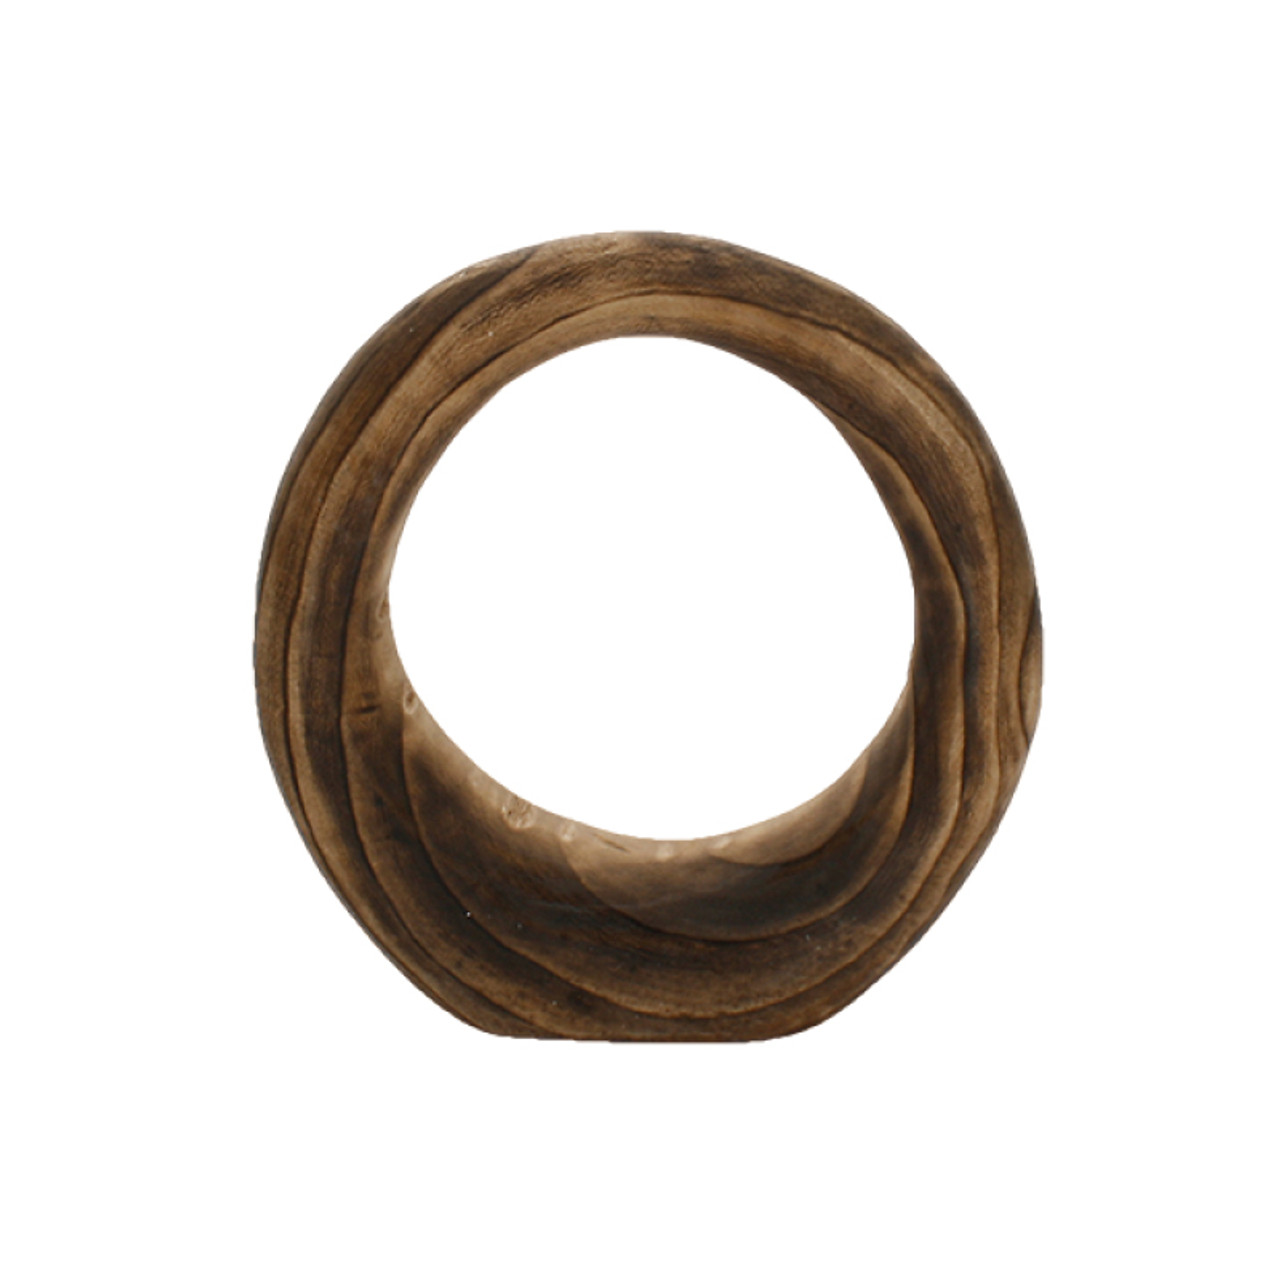 Wood Burning Studio Lara - Wooden ring with red epoxy resin. Possible  custom order. #woodburningstudio #woodworking #epoxyresinjewelry  #epoxyresin #epoxyring #epoxyart #epoxybank #customorder #resin  #worldwideshipping #customorder #epoxy #wood #croatia ...